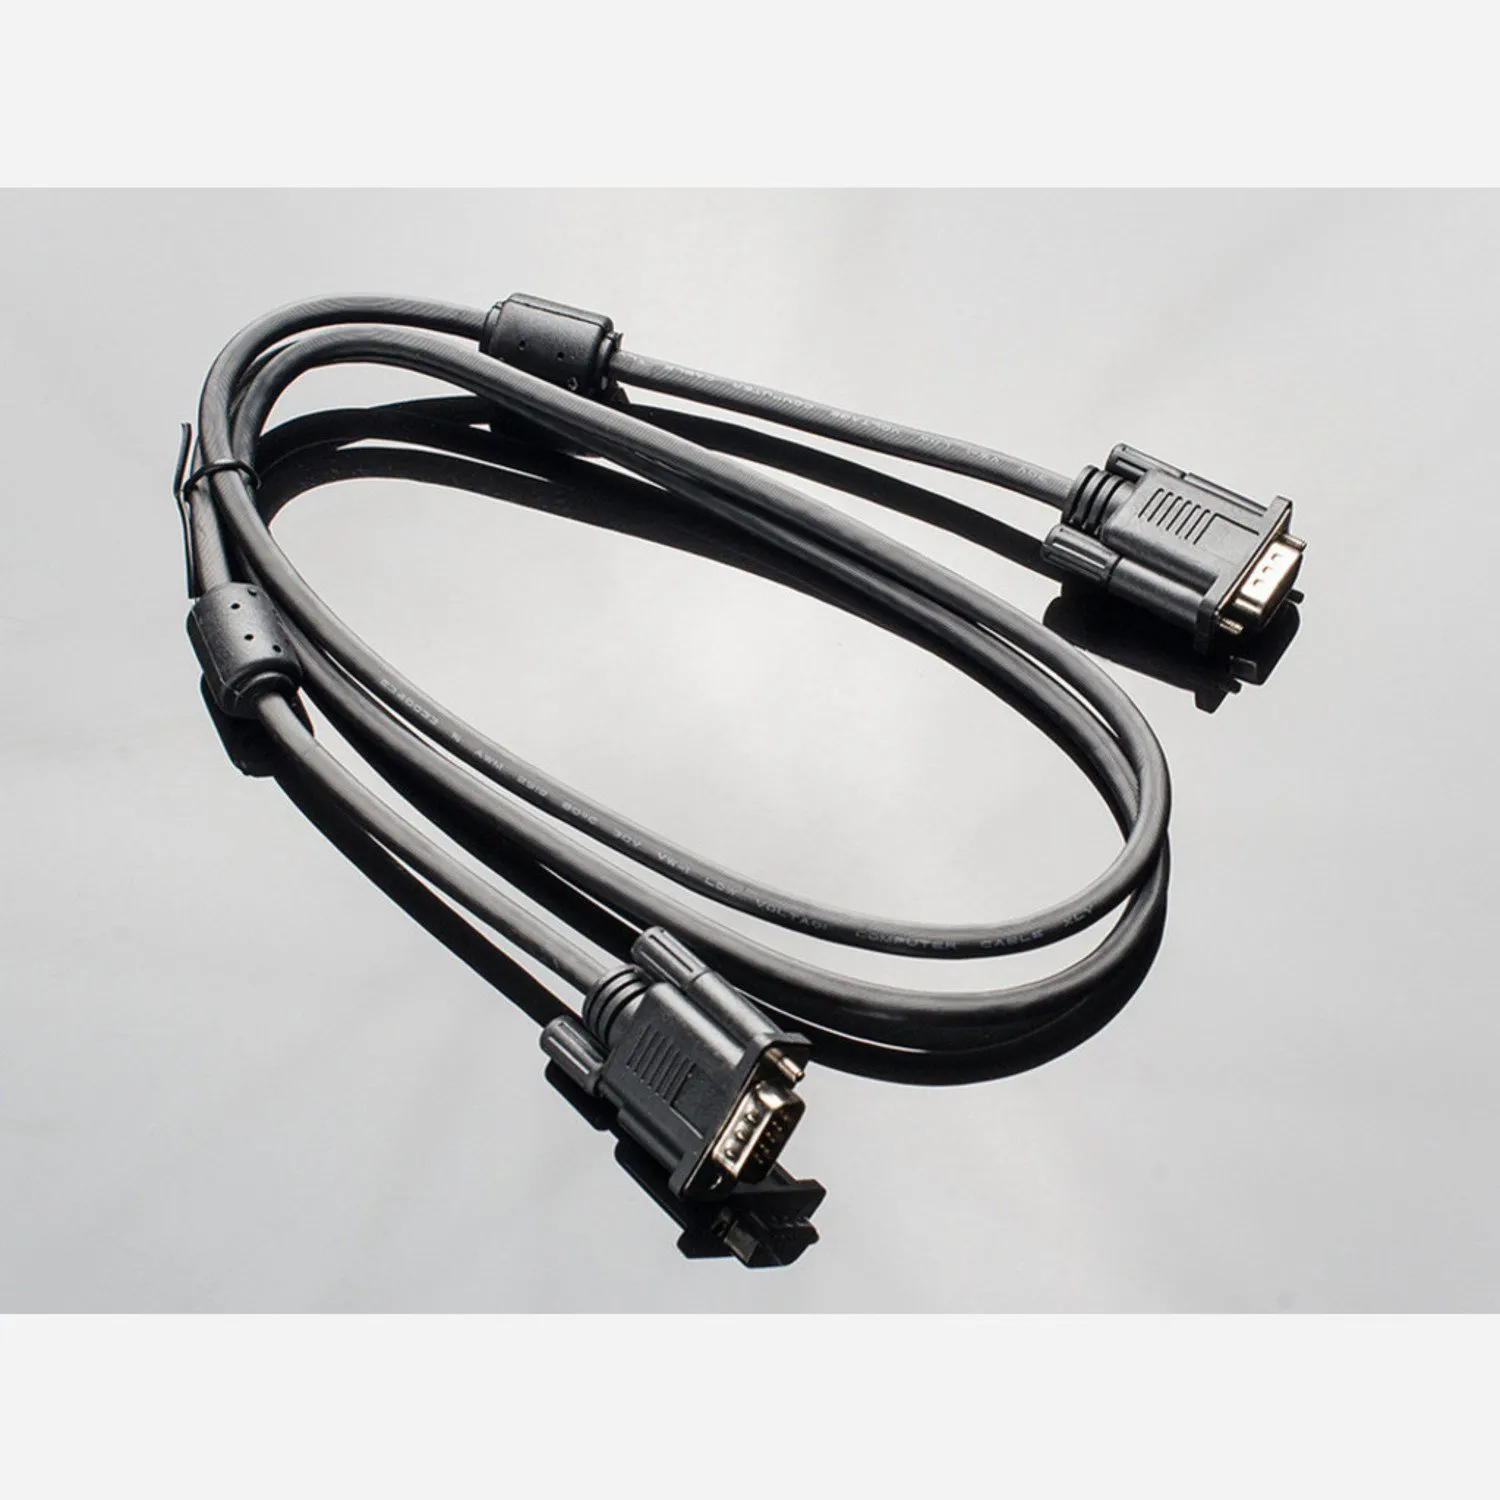 Photo of VGA Cable - 1.5m long